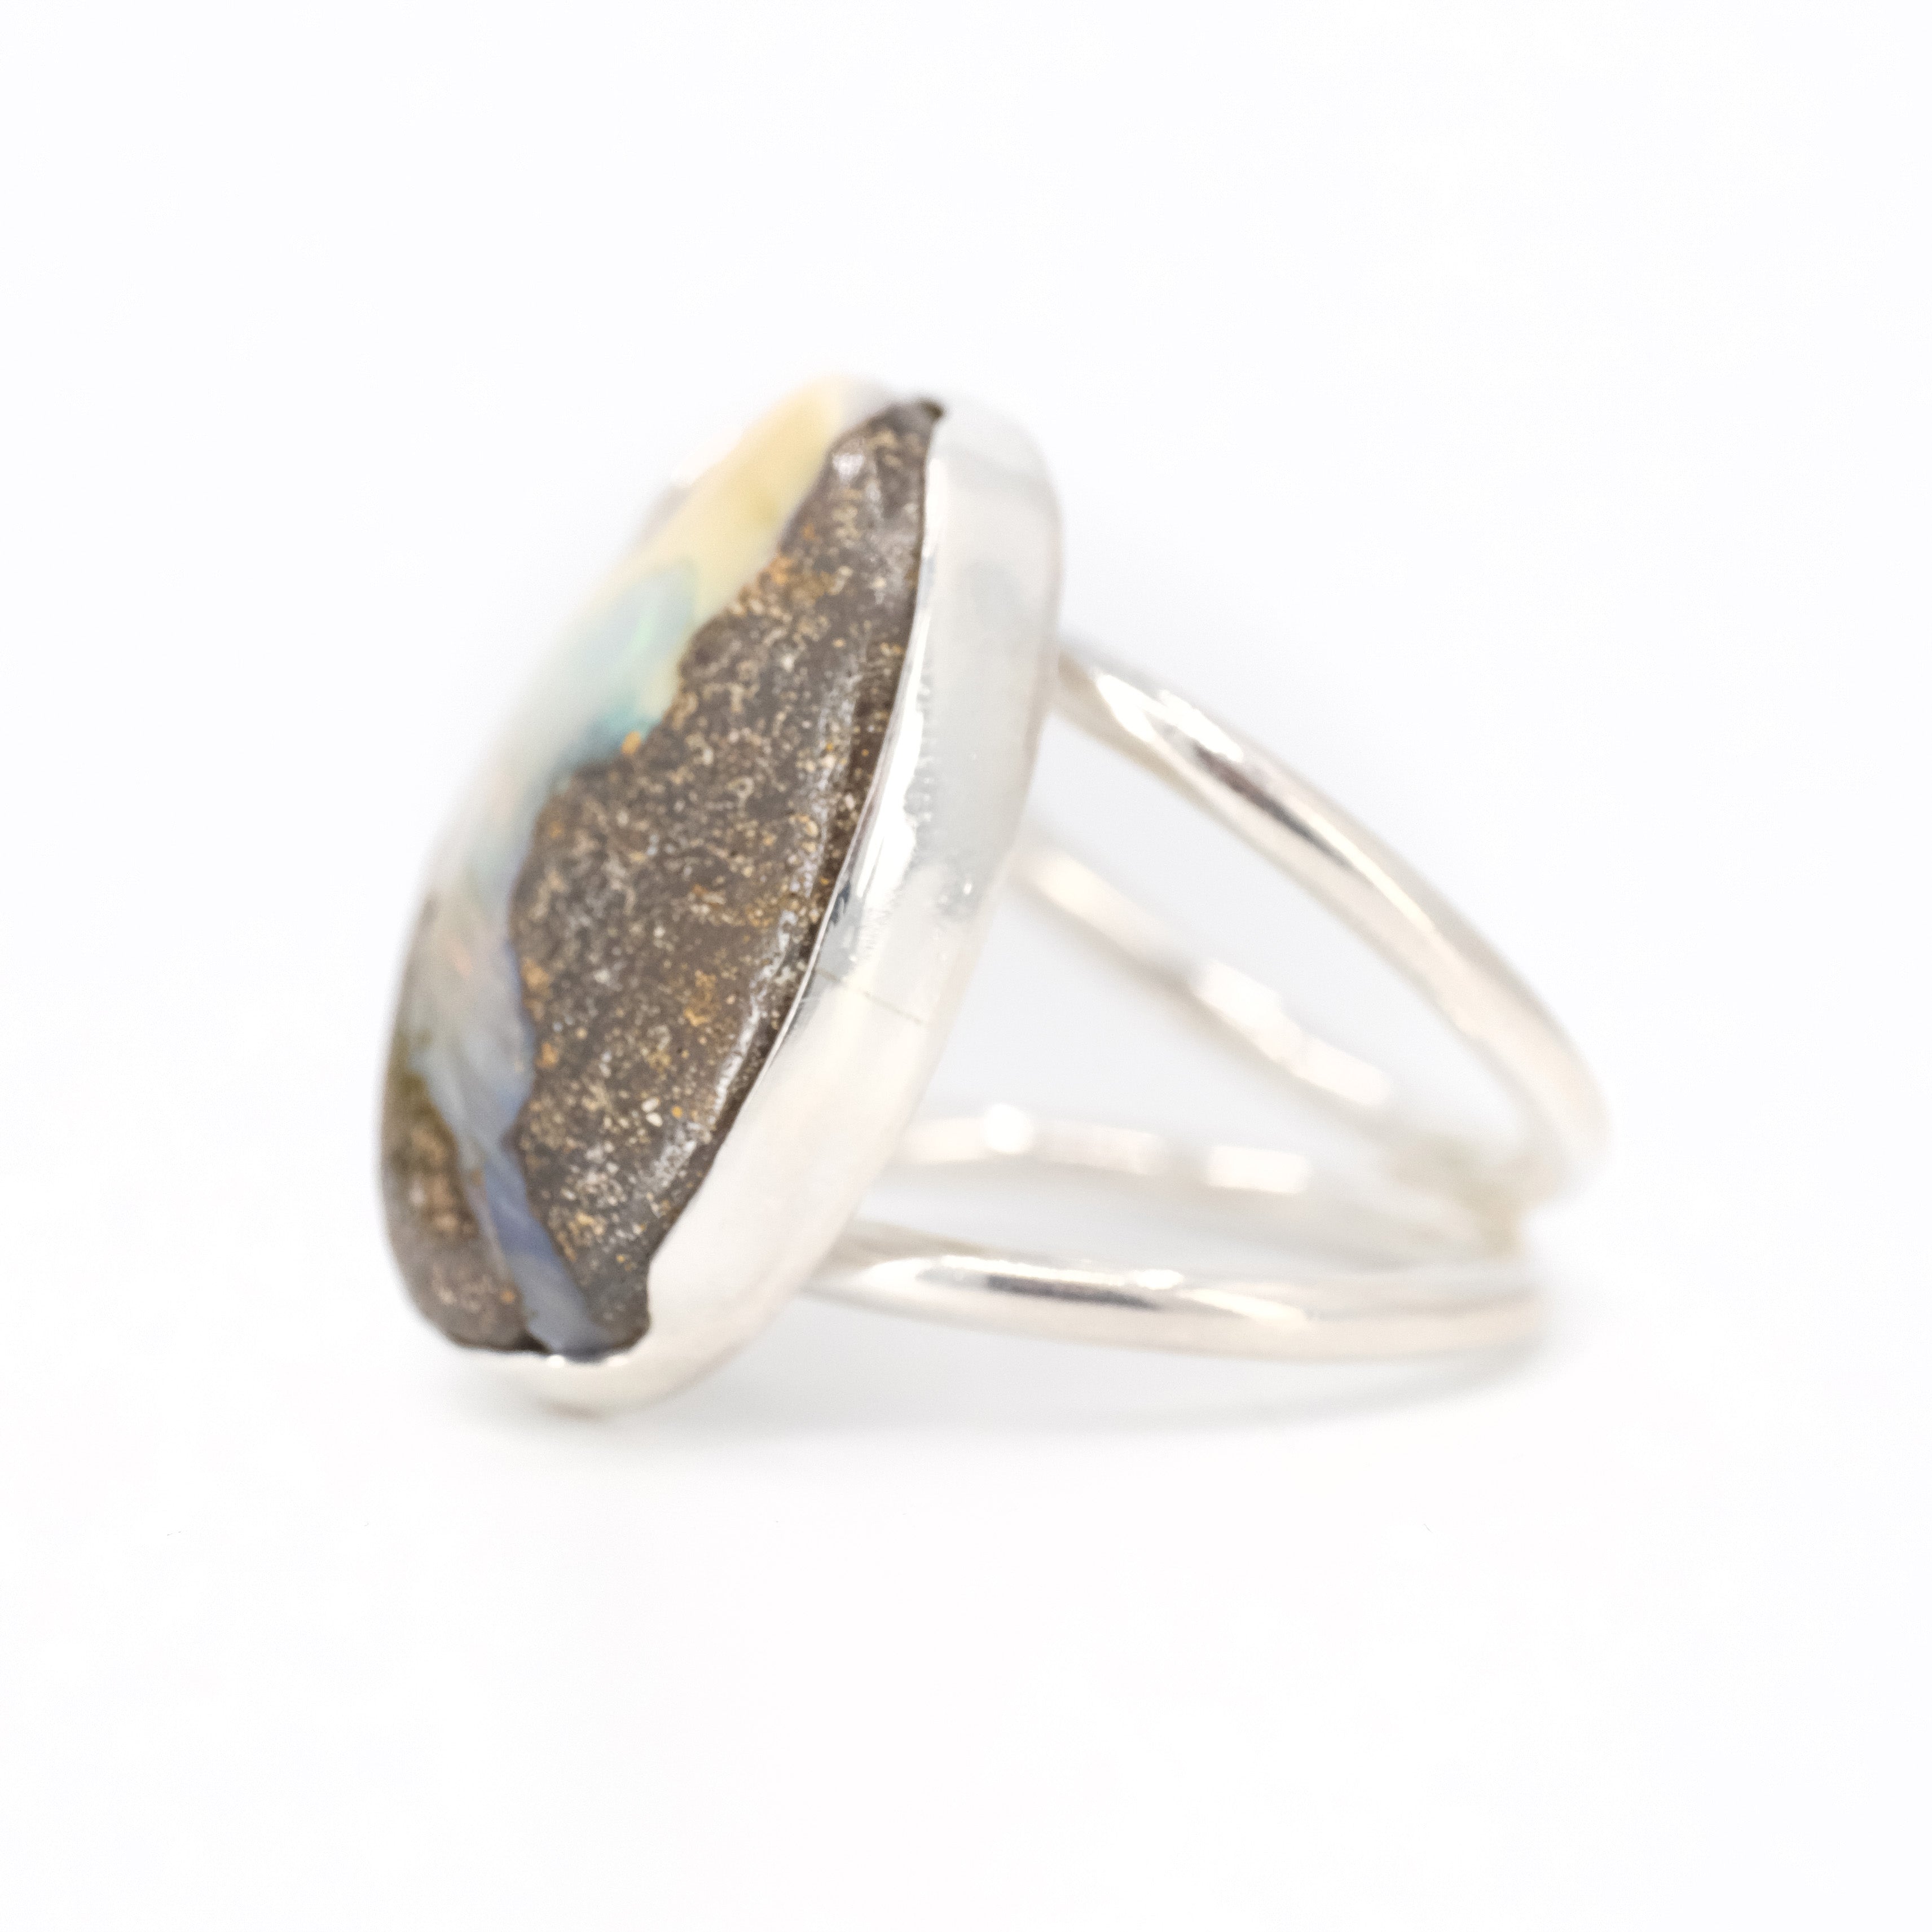 Australian Opal Ravine Ring (Size 7) - One of a Kind